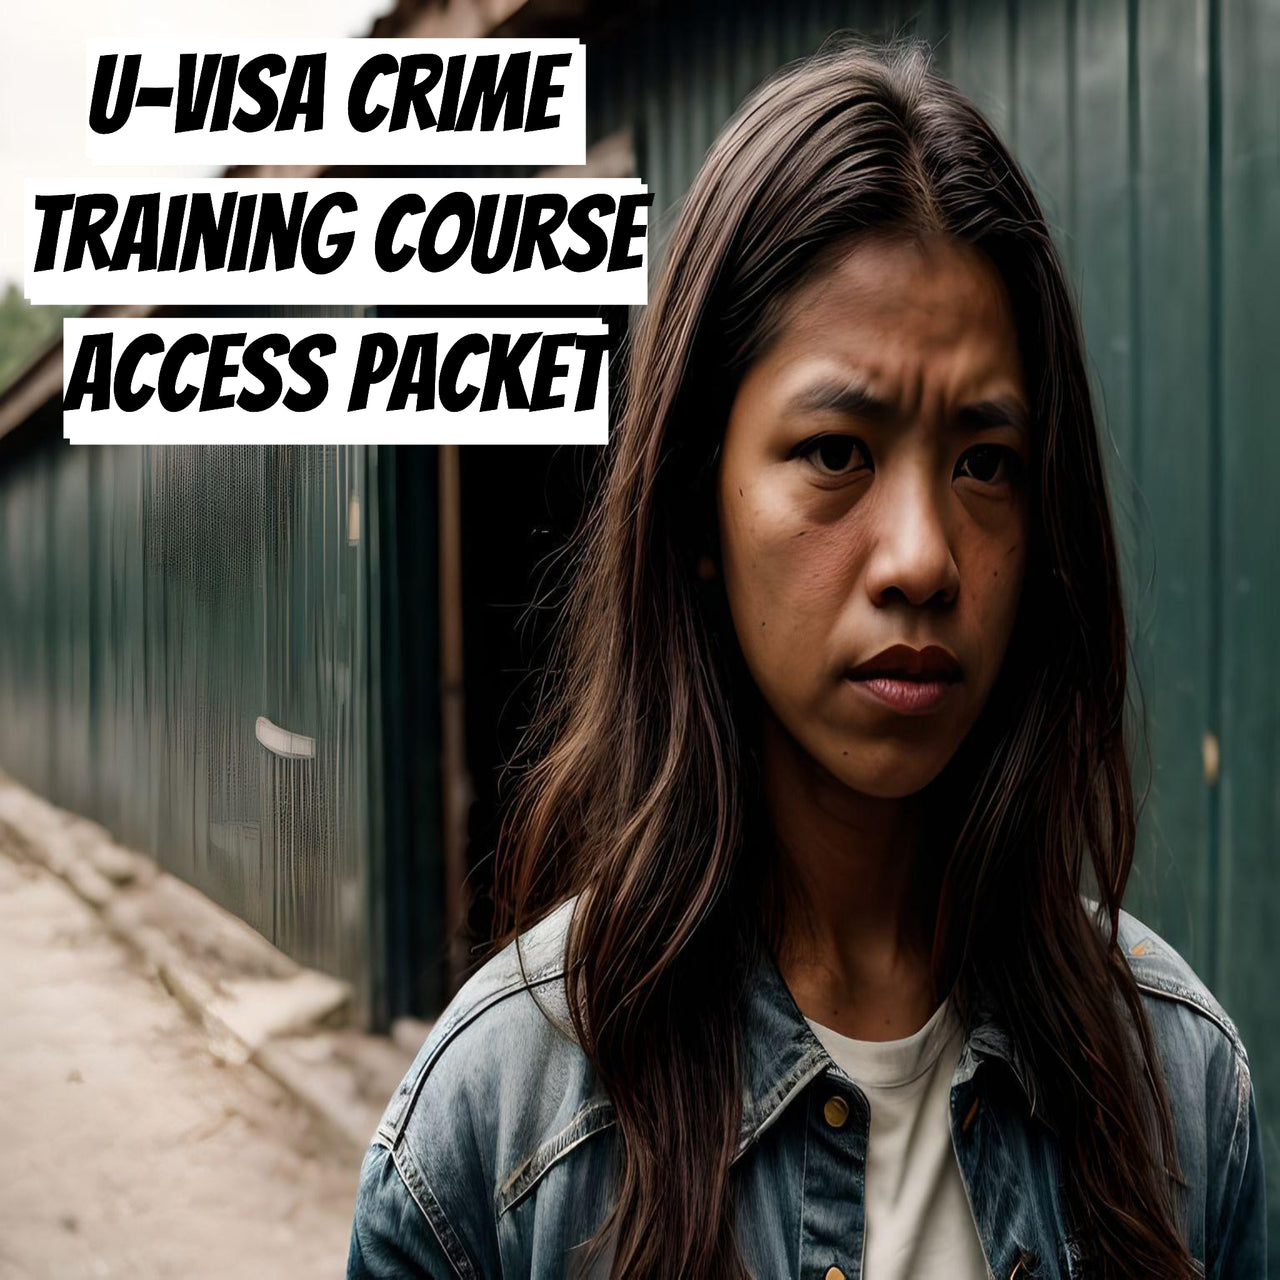 U-Visa Crime Training Course Access Packet